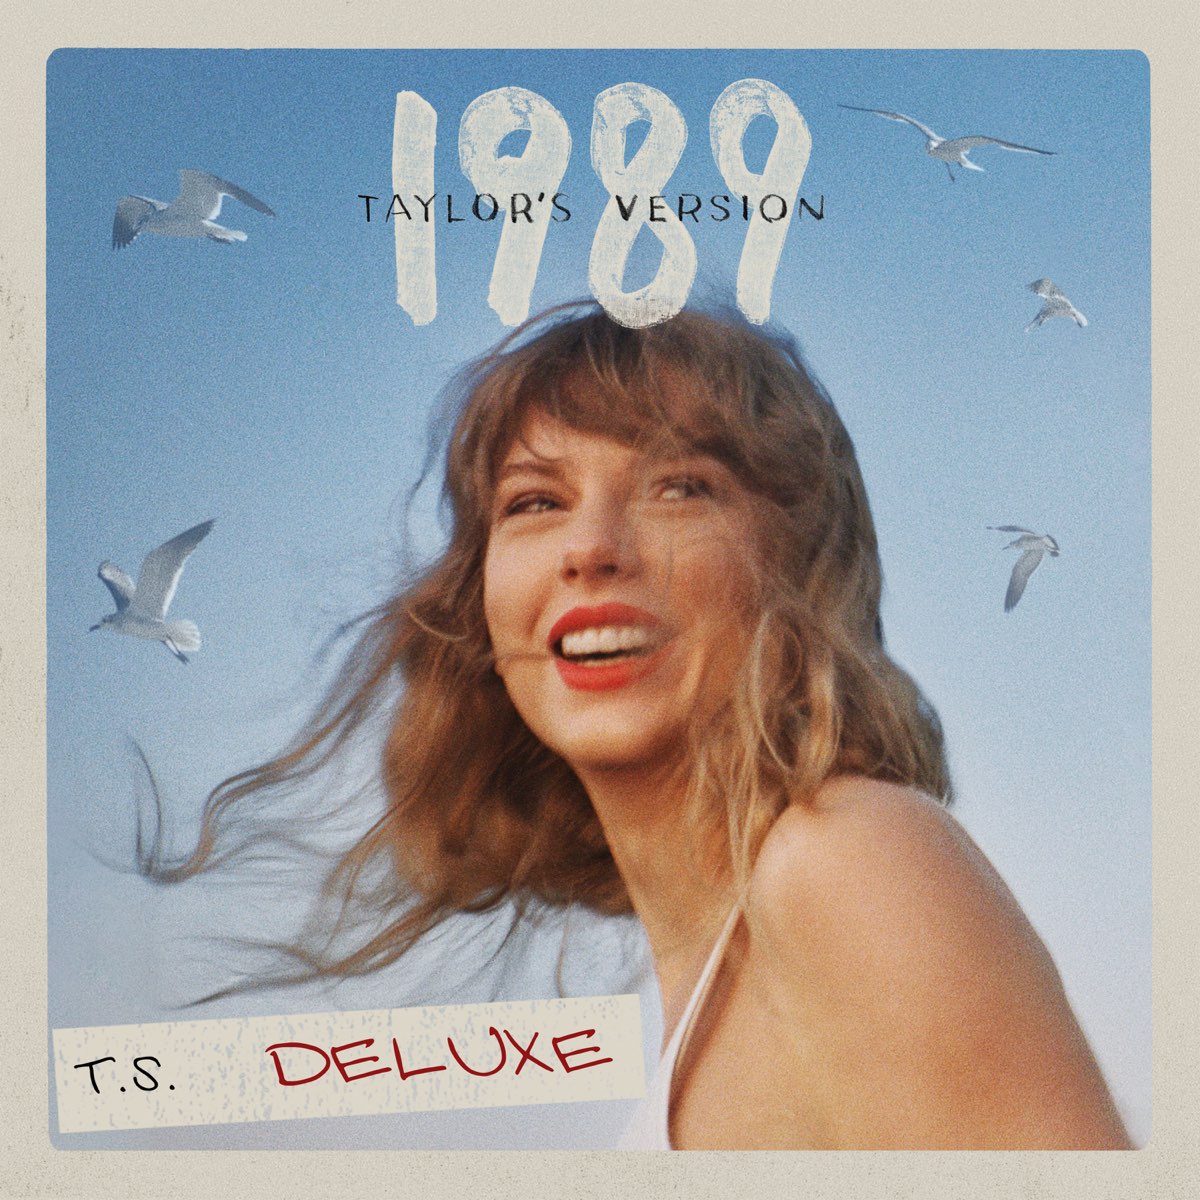 1989 (Taylor's Version) [Deluxe] - テイラー・スウィフトのアルバム 